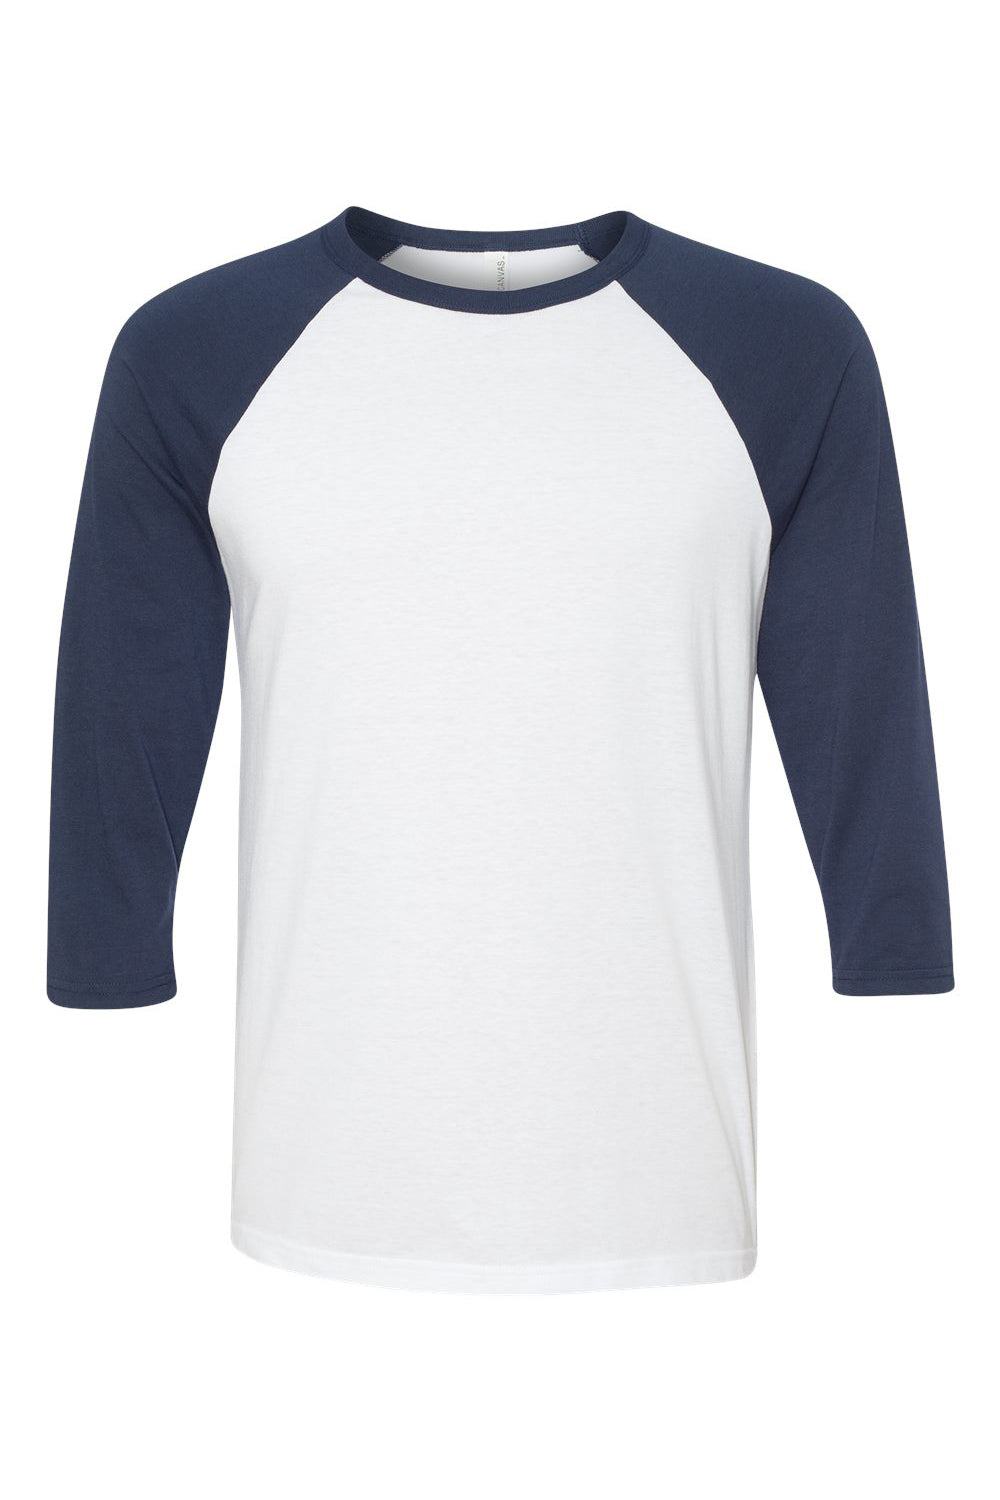 Bella + Canvas BC3200/3200 Mens 3/4 Sleeve Crewneck T-Shirt White/Navy Blue Flat Front